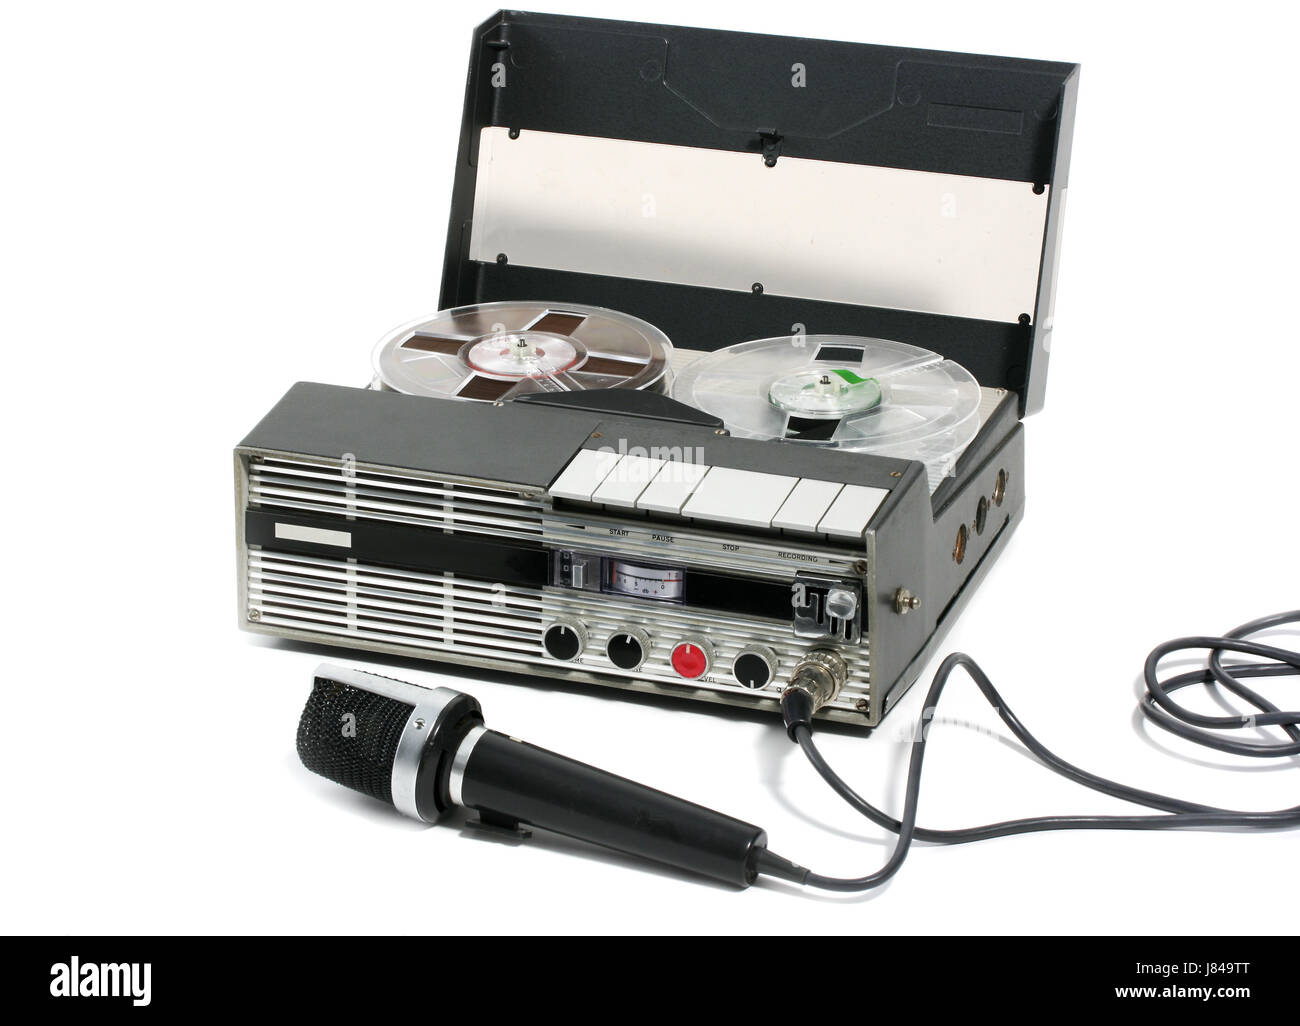 https://c8.alamy.com/comp/J849TT/audio-retro-cassette-tape-sound-carrier-clasic-classic-recorder-studio-J849TT.jpg